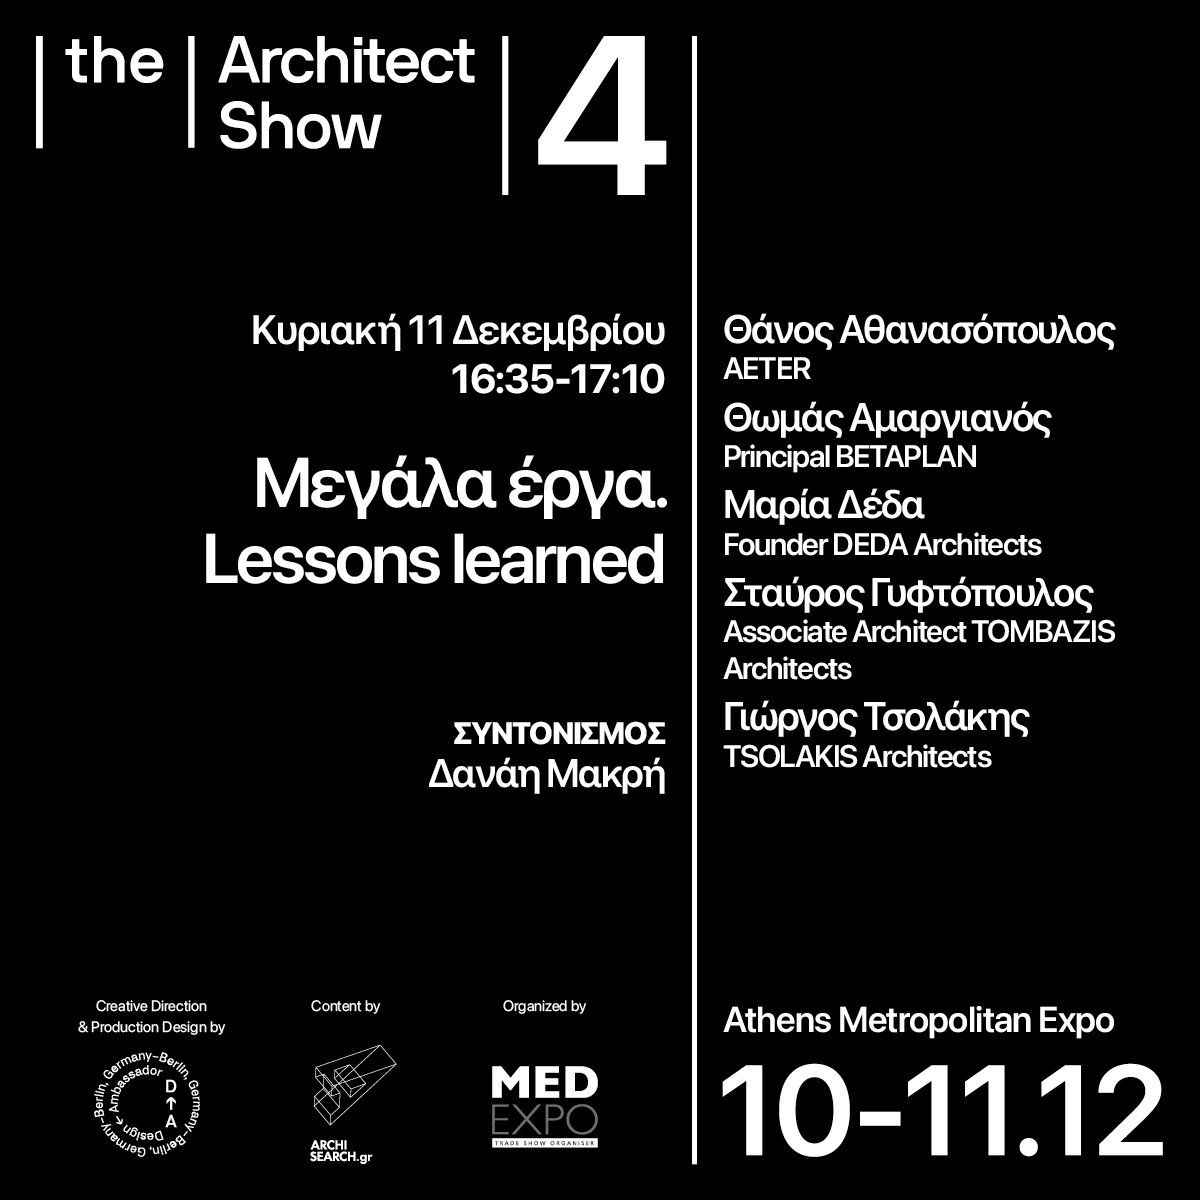 Archisearch The Architect Show 4 _ 'Fast forward', 10&11 Δεκεμβρίου 2022, Metropolitan Expo: τι θα δούμε τη δεύτερη μέρα του συνεδρίου που αναμένεται να αποτελέσει μία ανάσα δημιουργικής ανταλλαγής γνώσεων και ιδεών